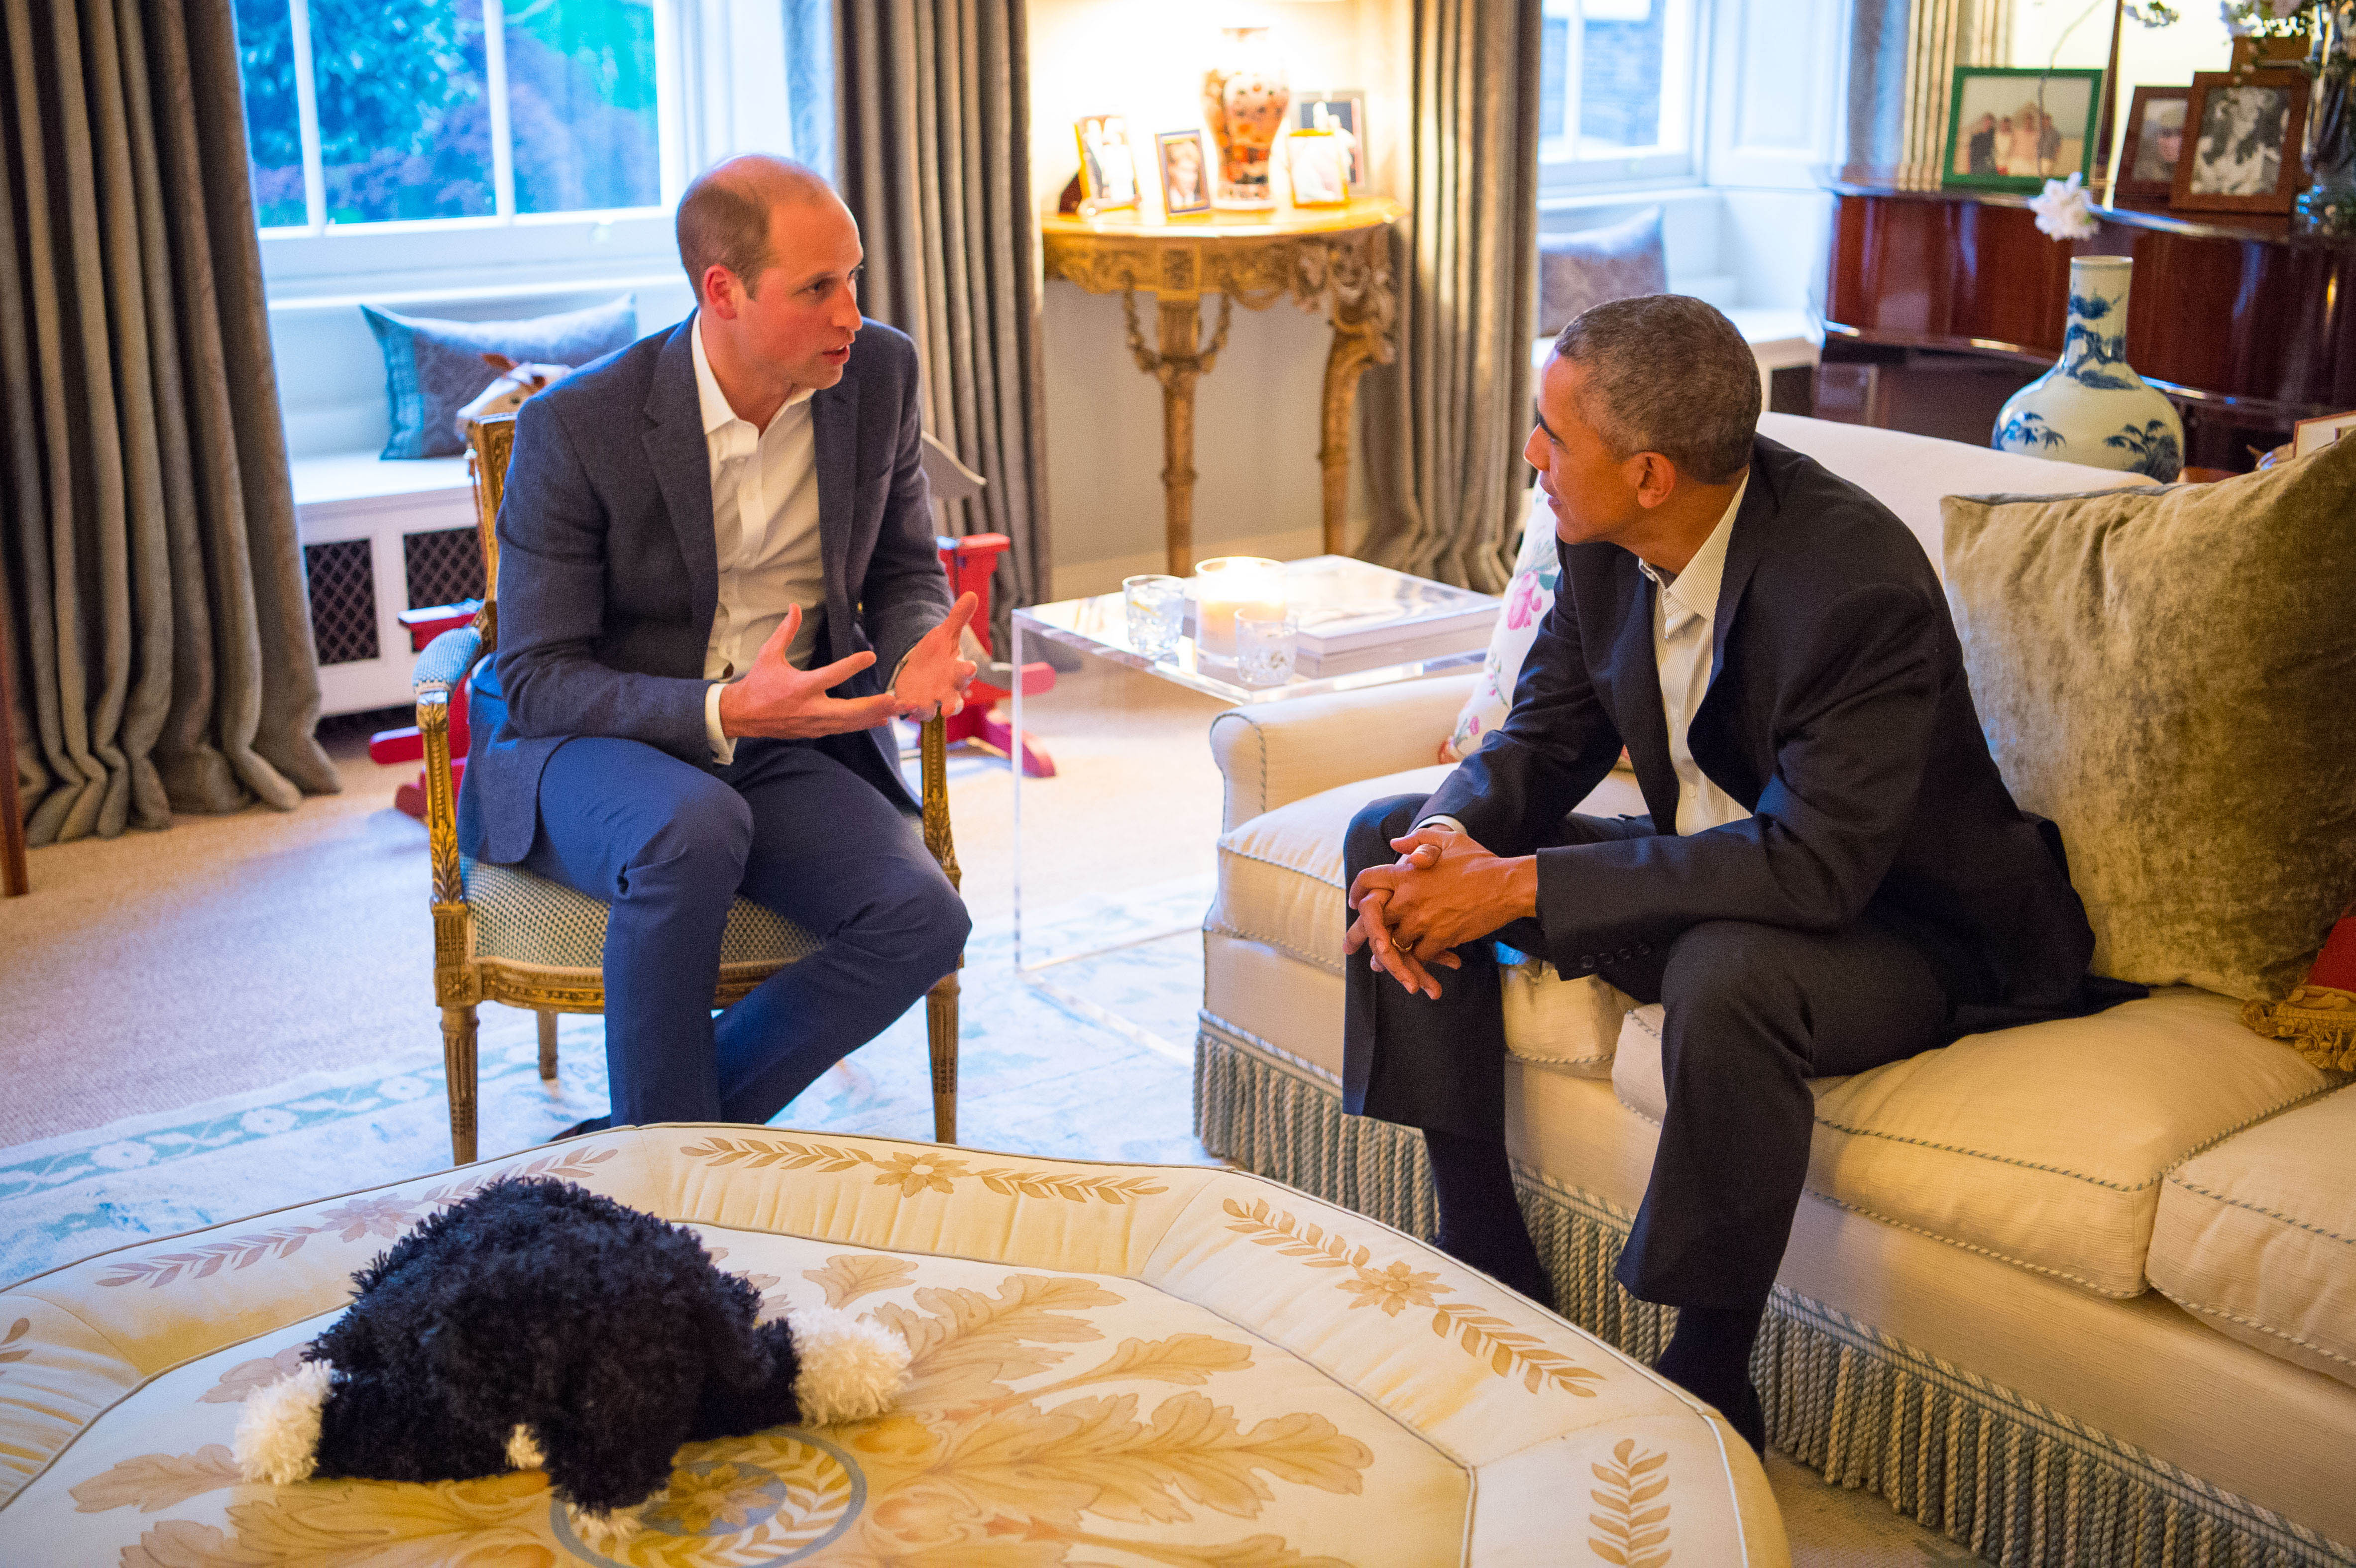 Prince William and President Obama